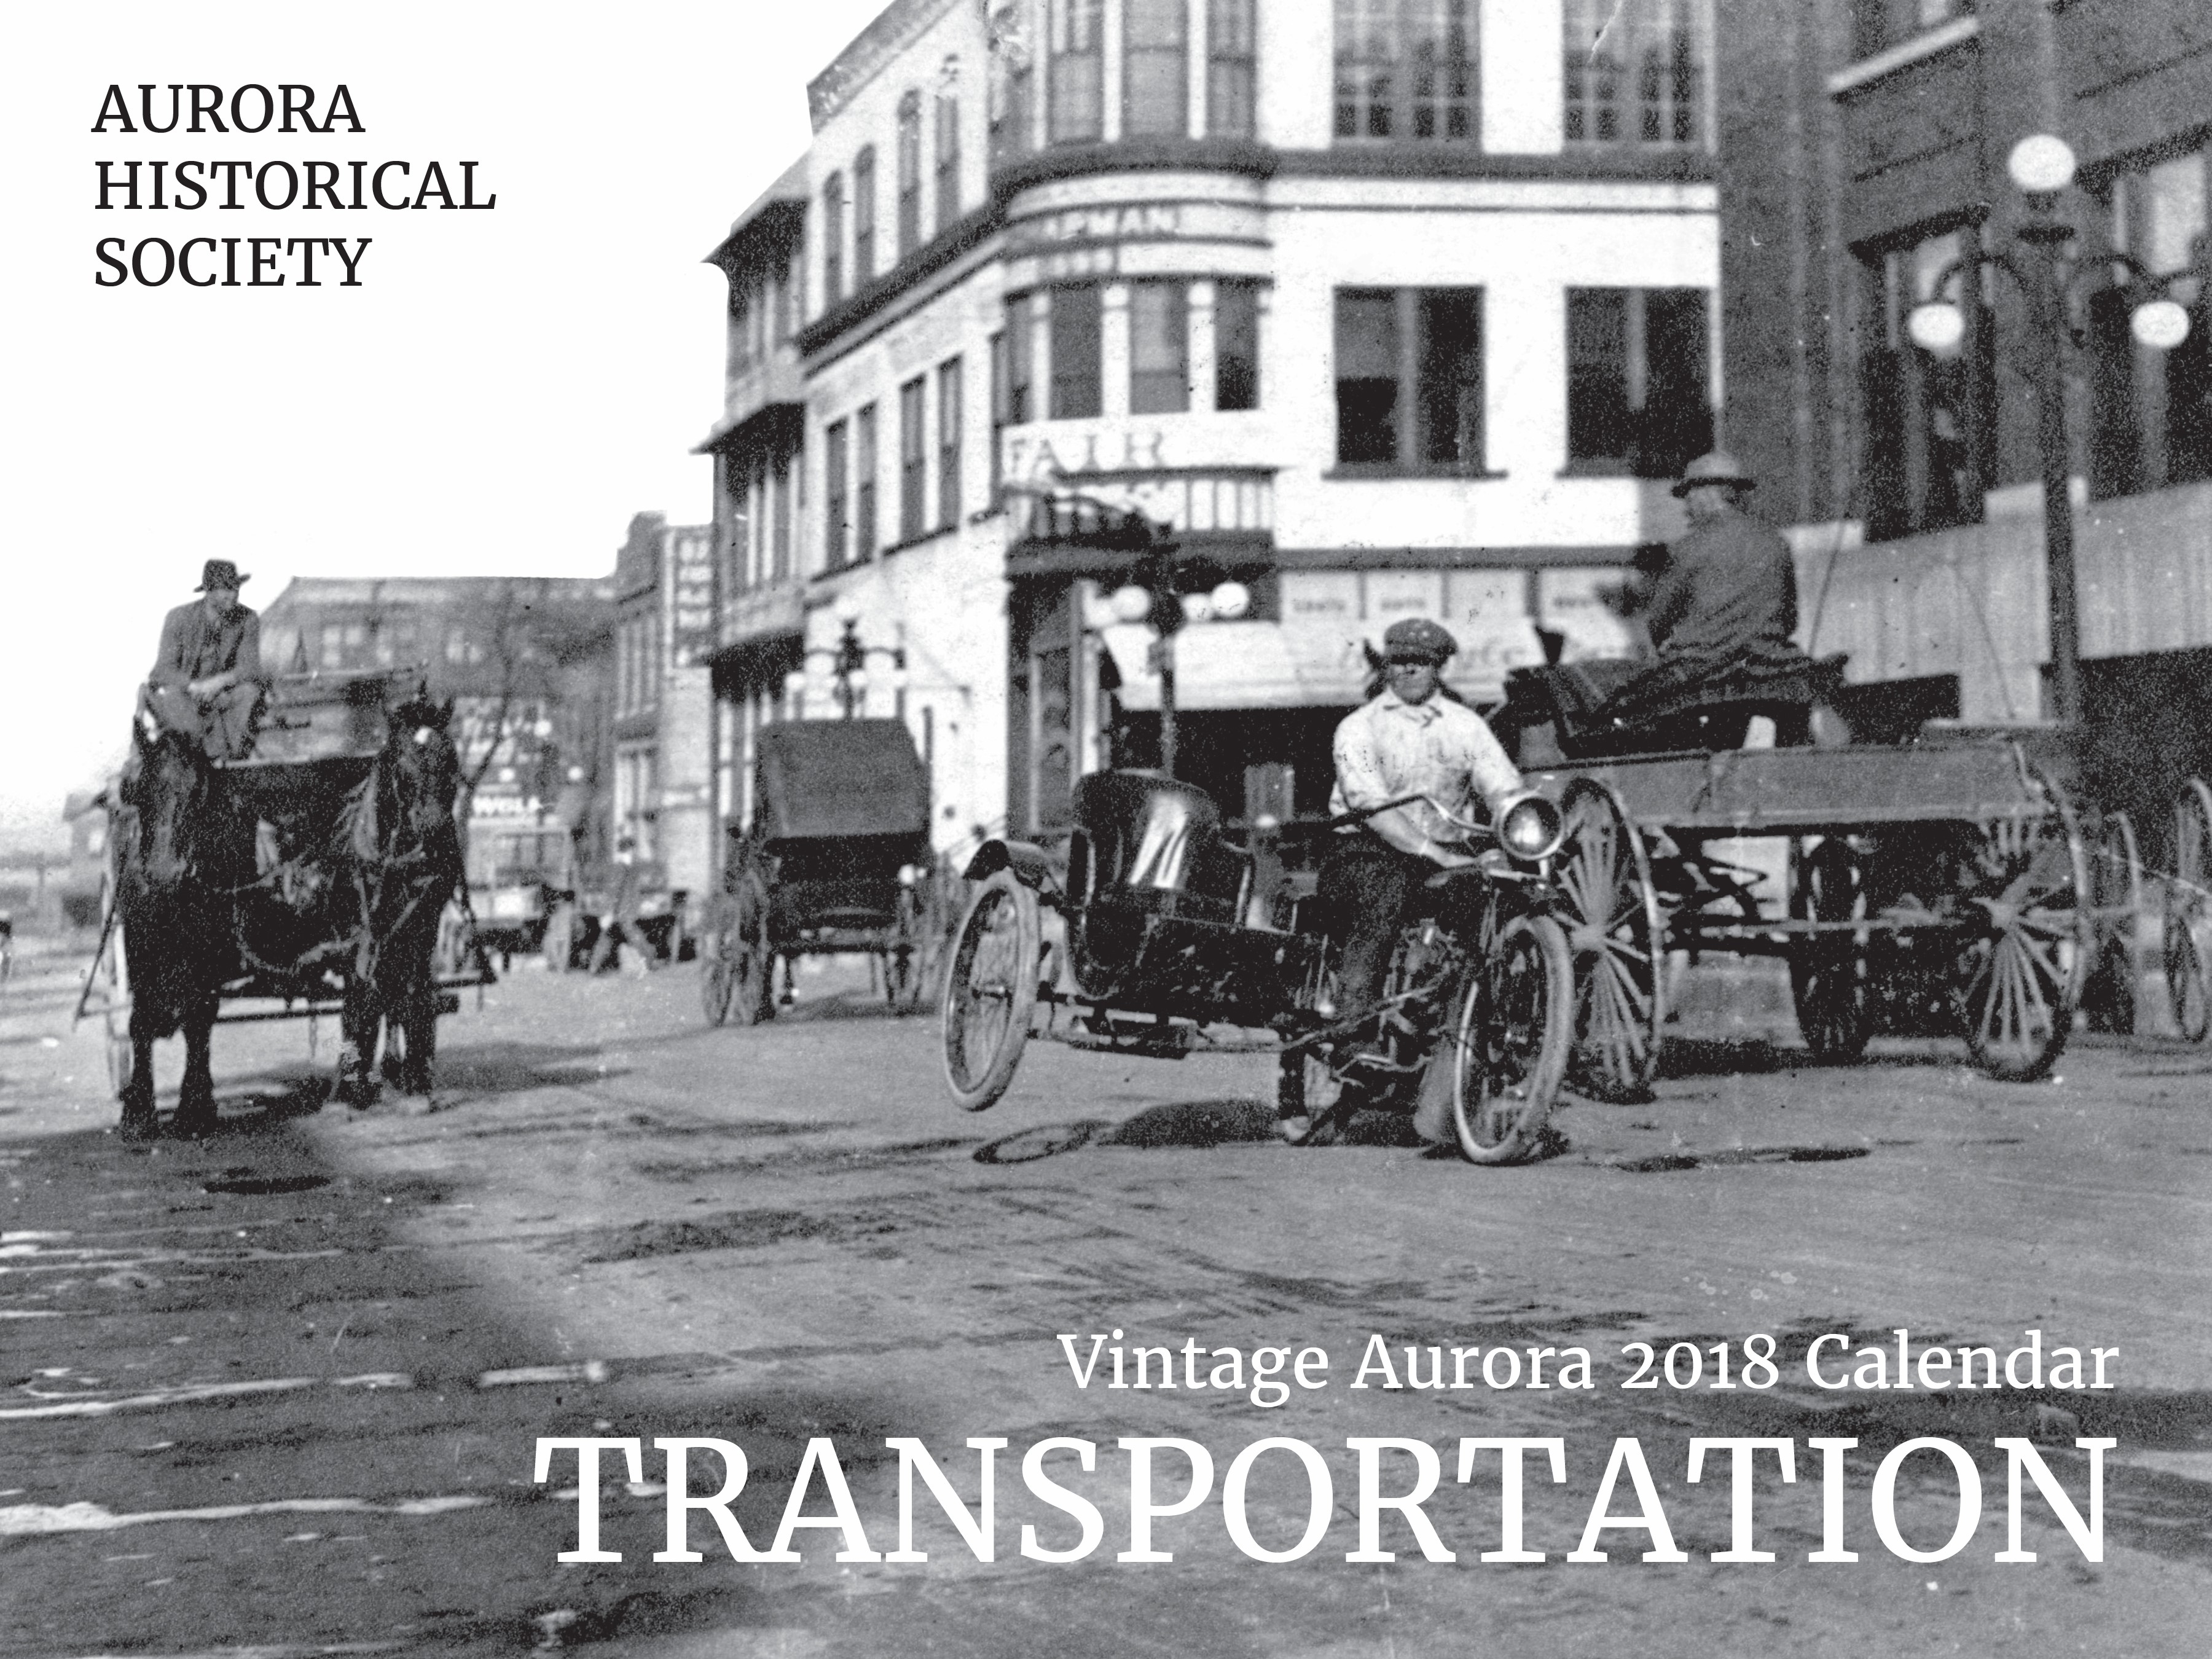 Vintage Aurora 2018 Calendar: Transportation